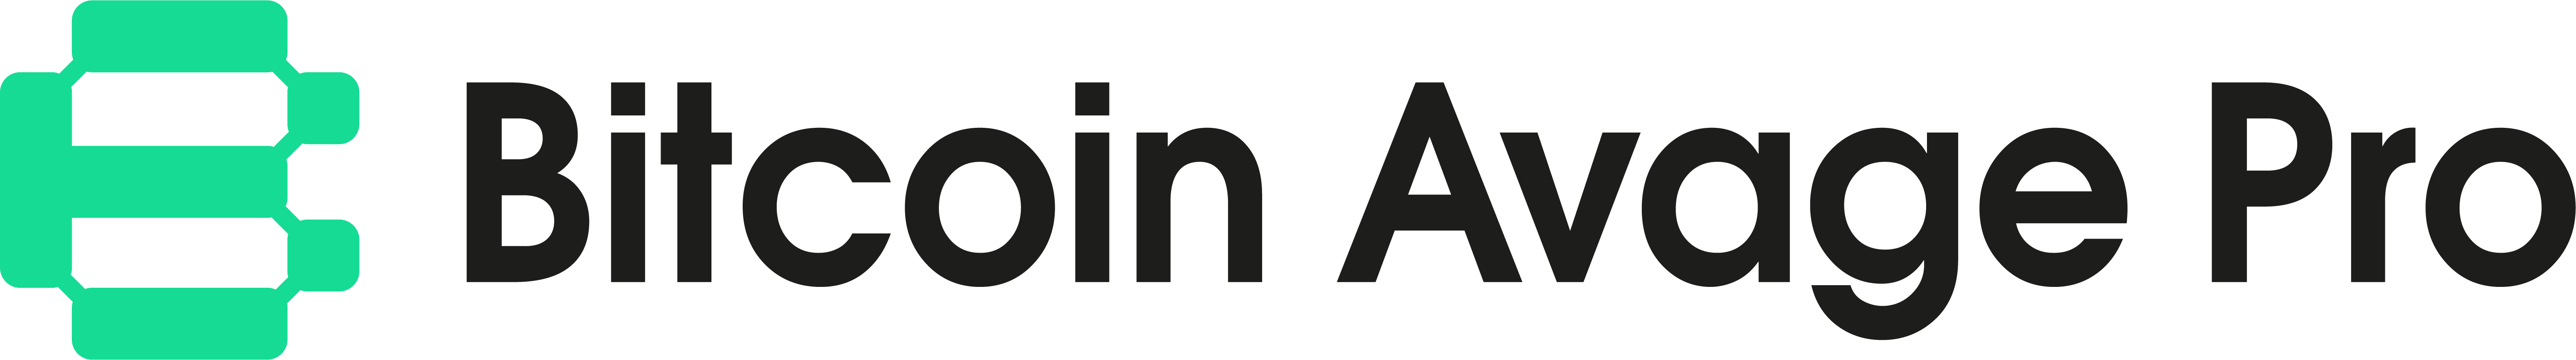 Bitcoin Avage Pro logó